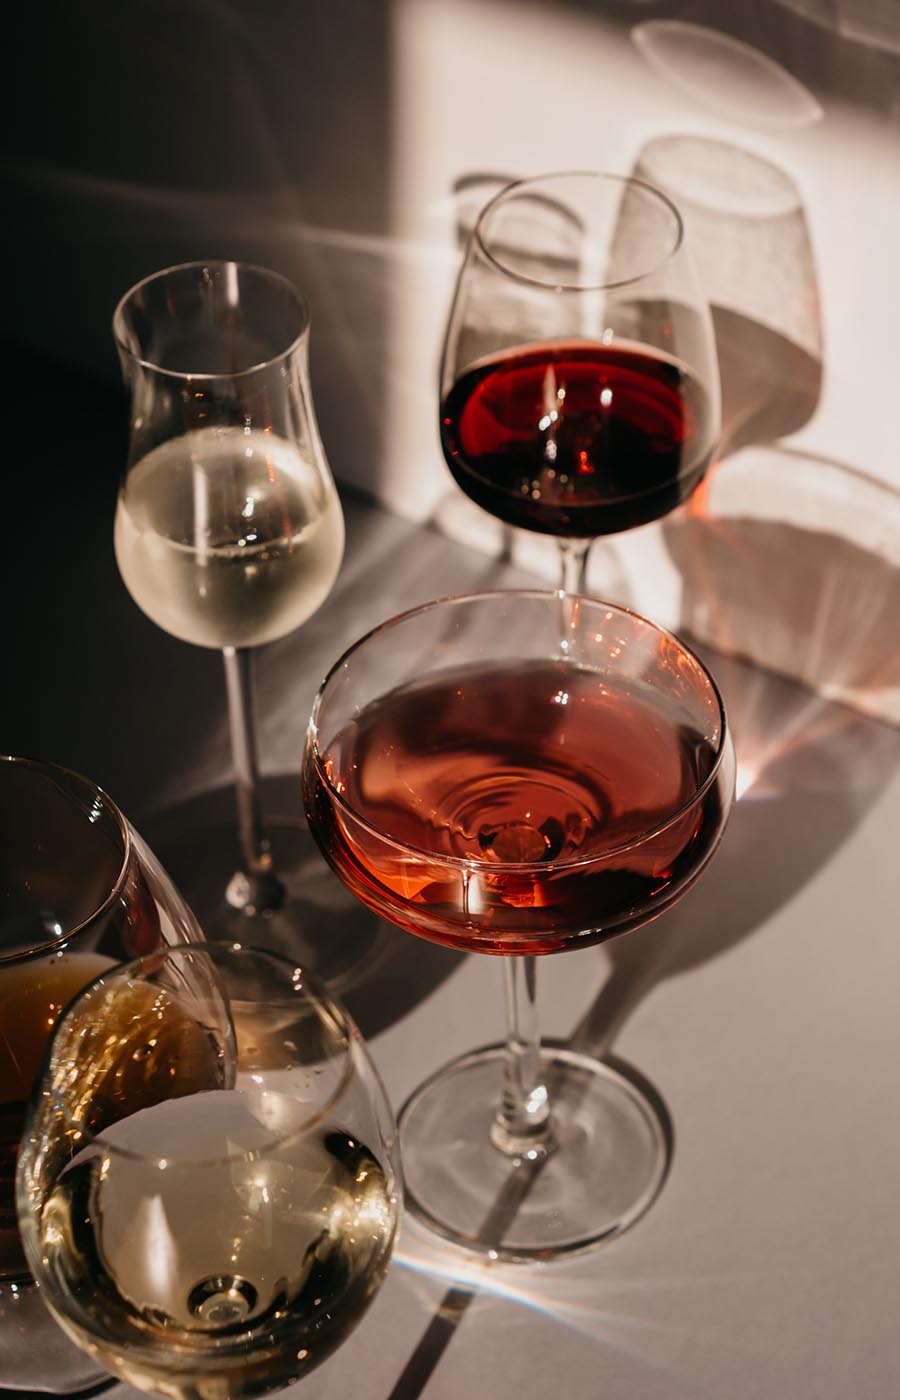 La Motte Wine tips and tricks